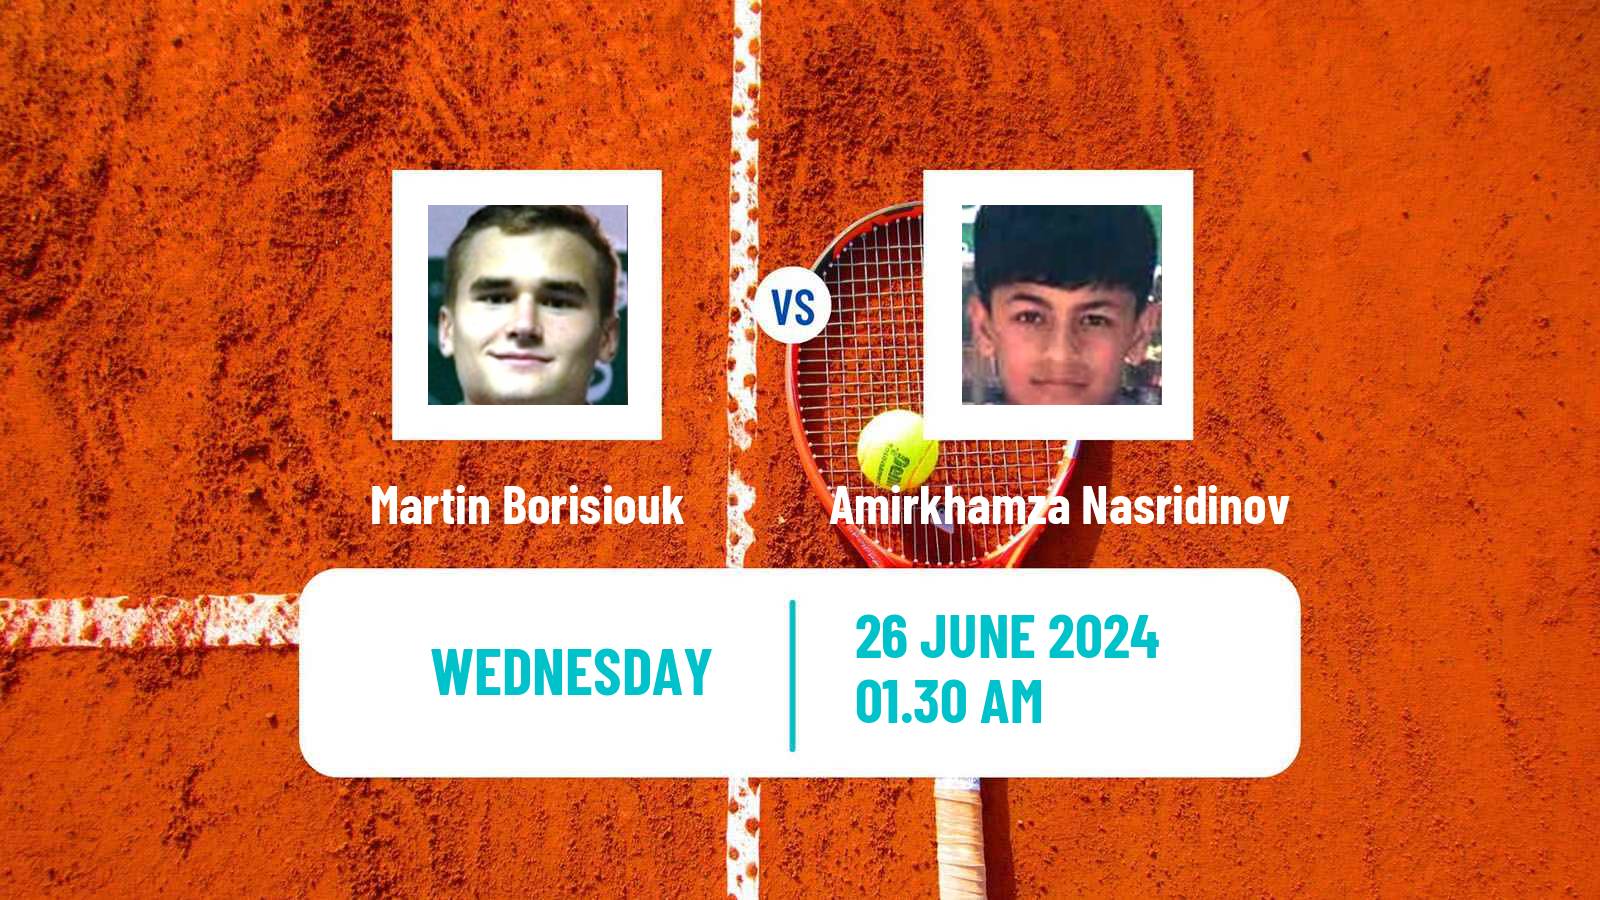 Tennis ITF M15 Ust Kamenogorsk Men Martin Borisiouk - Amirkhamza Nasridinov